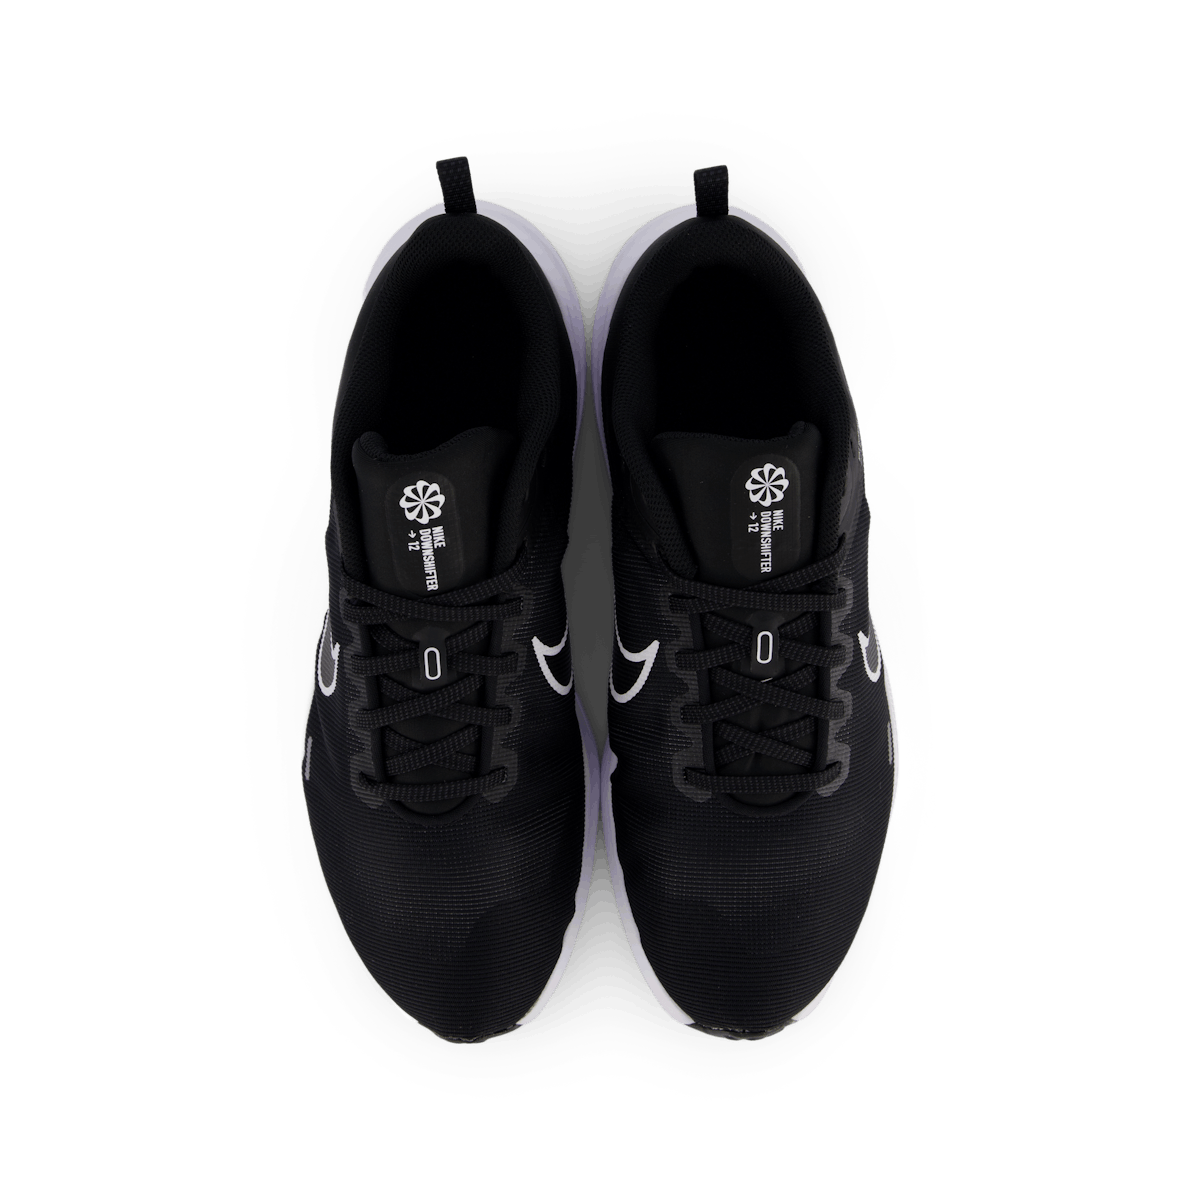 Downshifter 12 Men's Road Running Shoes BLACK/WHITE-DK SMOKE GREY-PURE PLATINUM